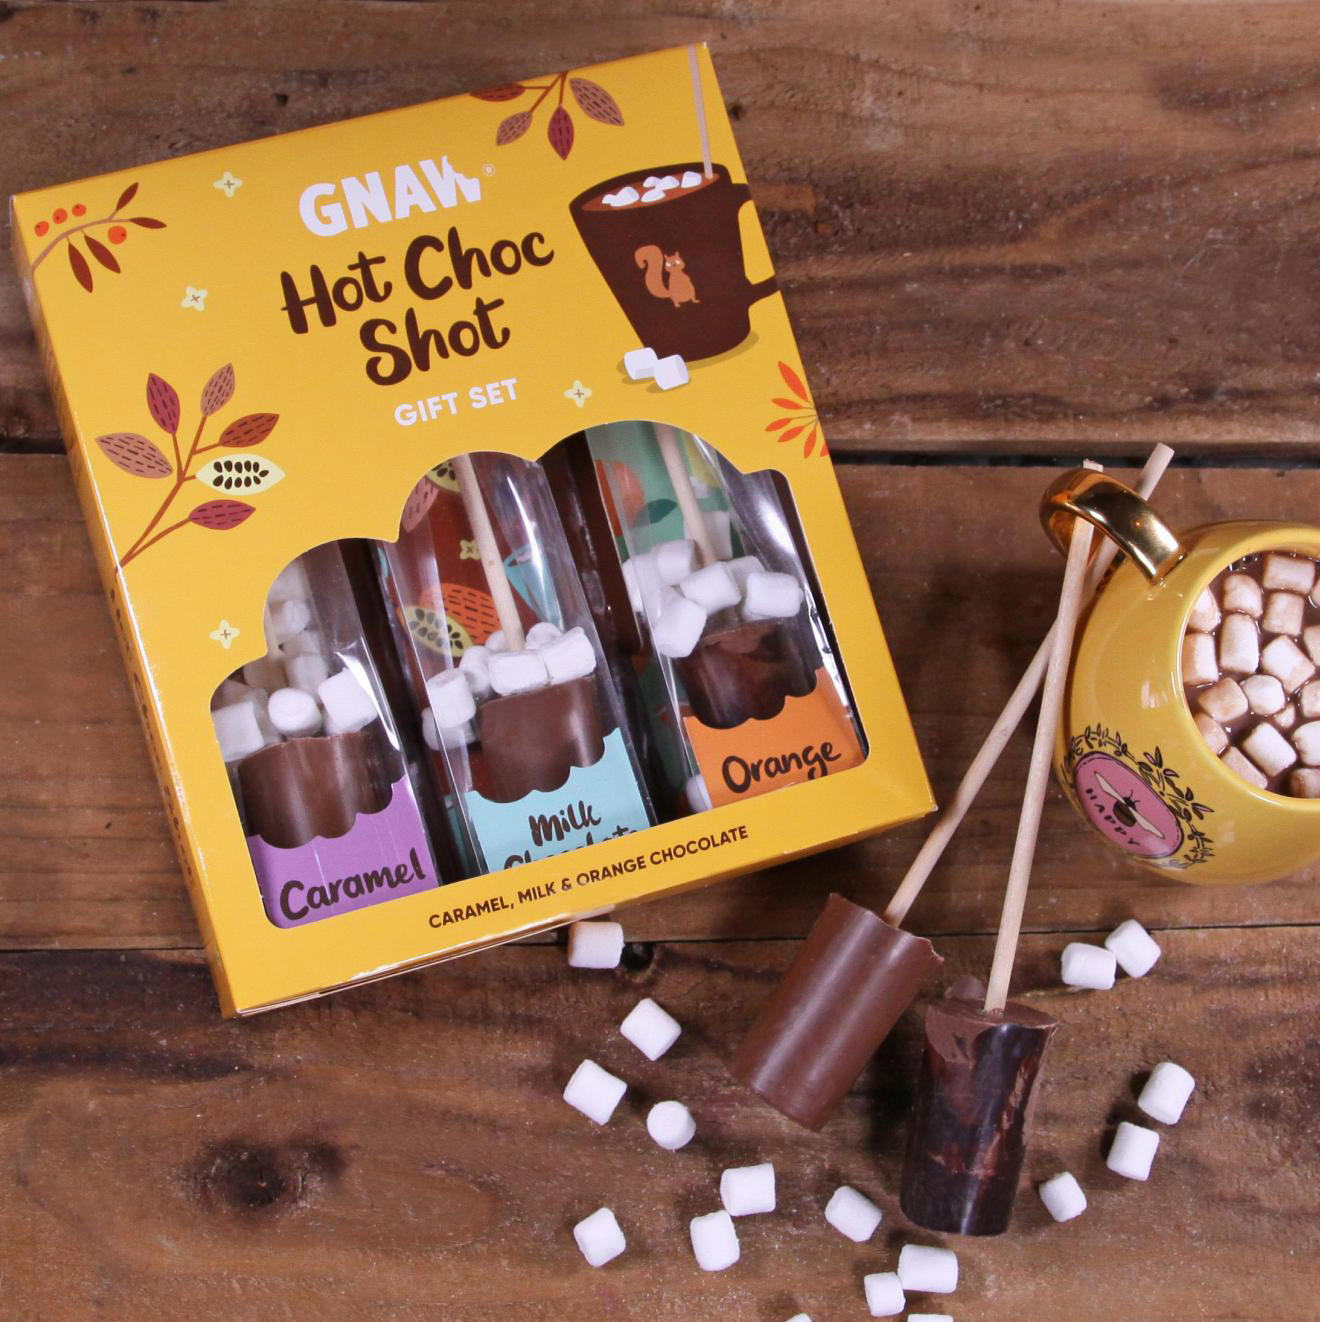 Gnaw Hot Choc Shot chokladdryck - Presentbox • Pryloteket